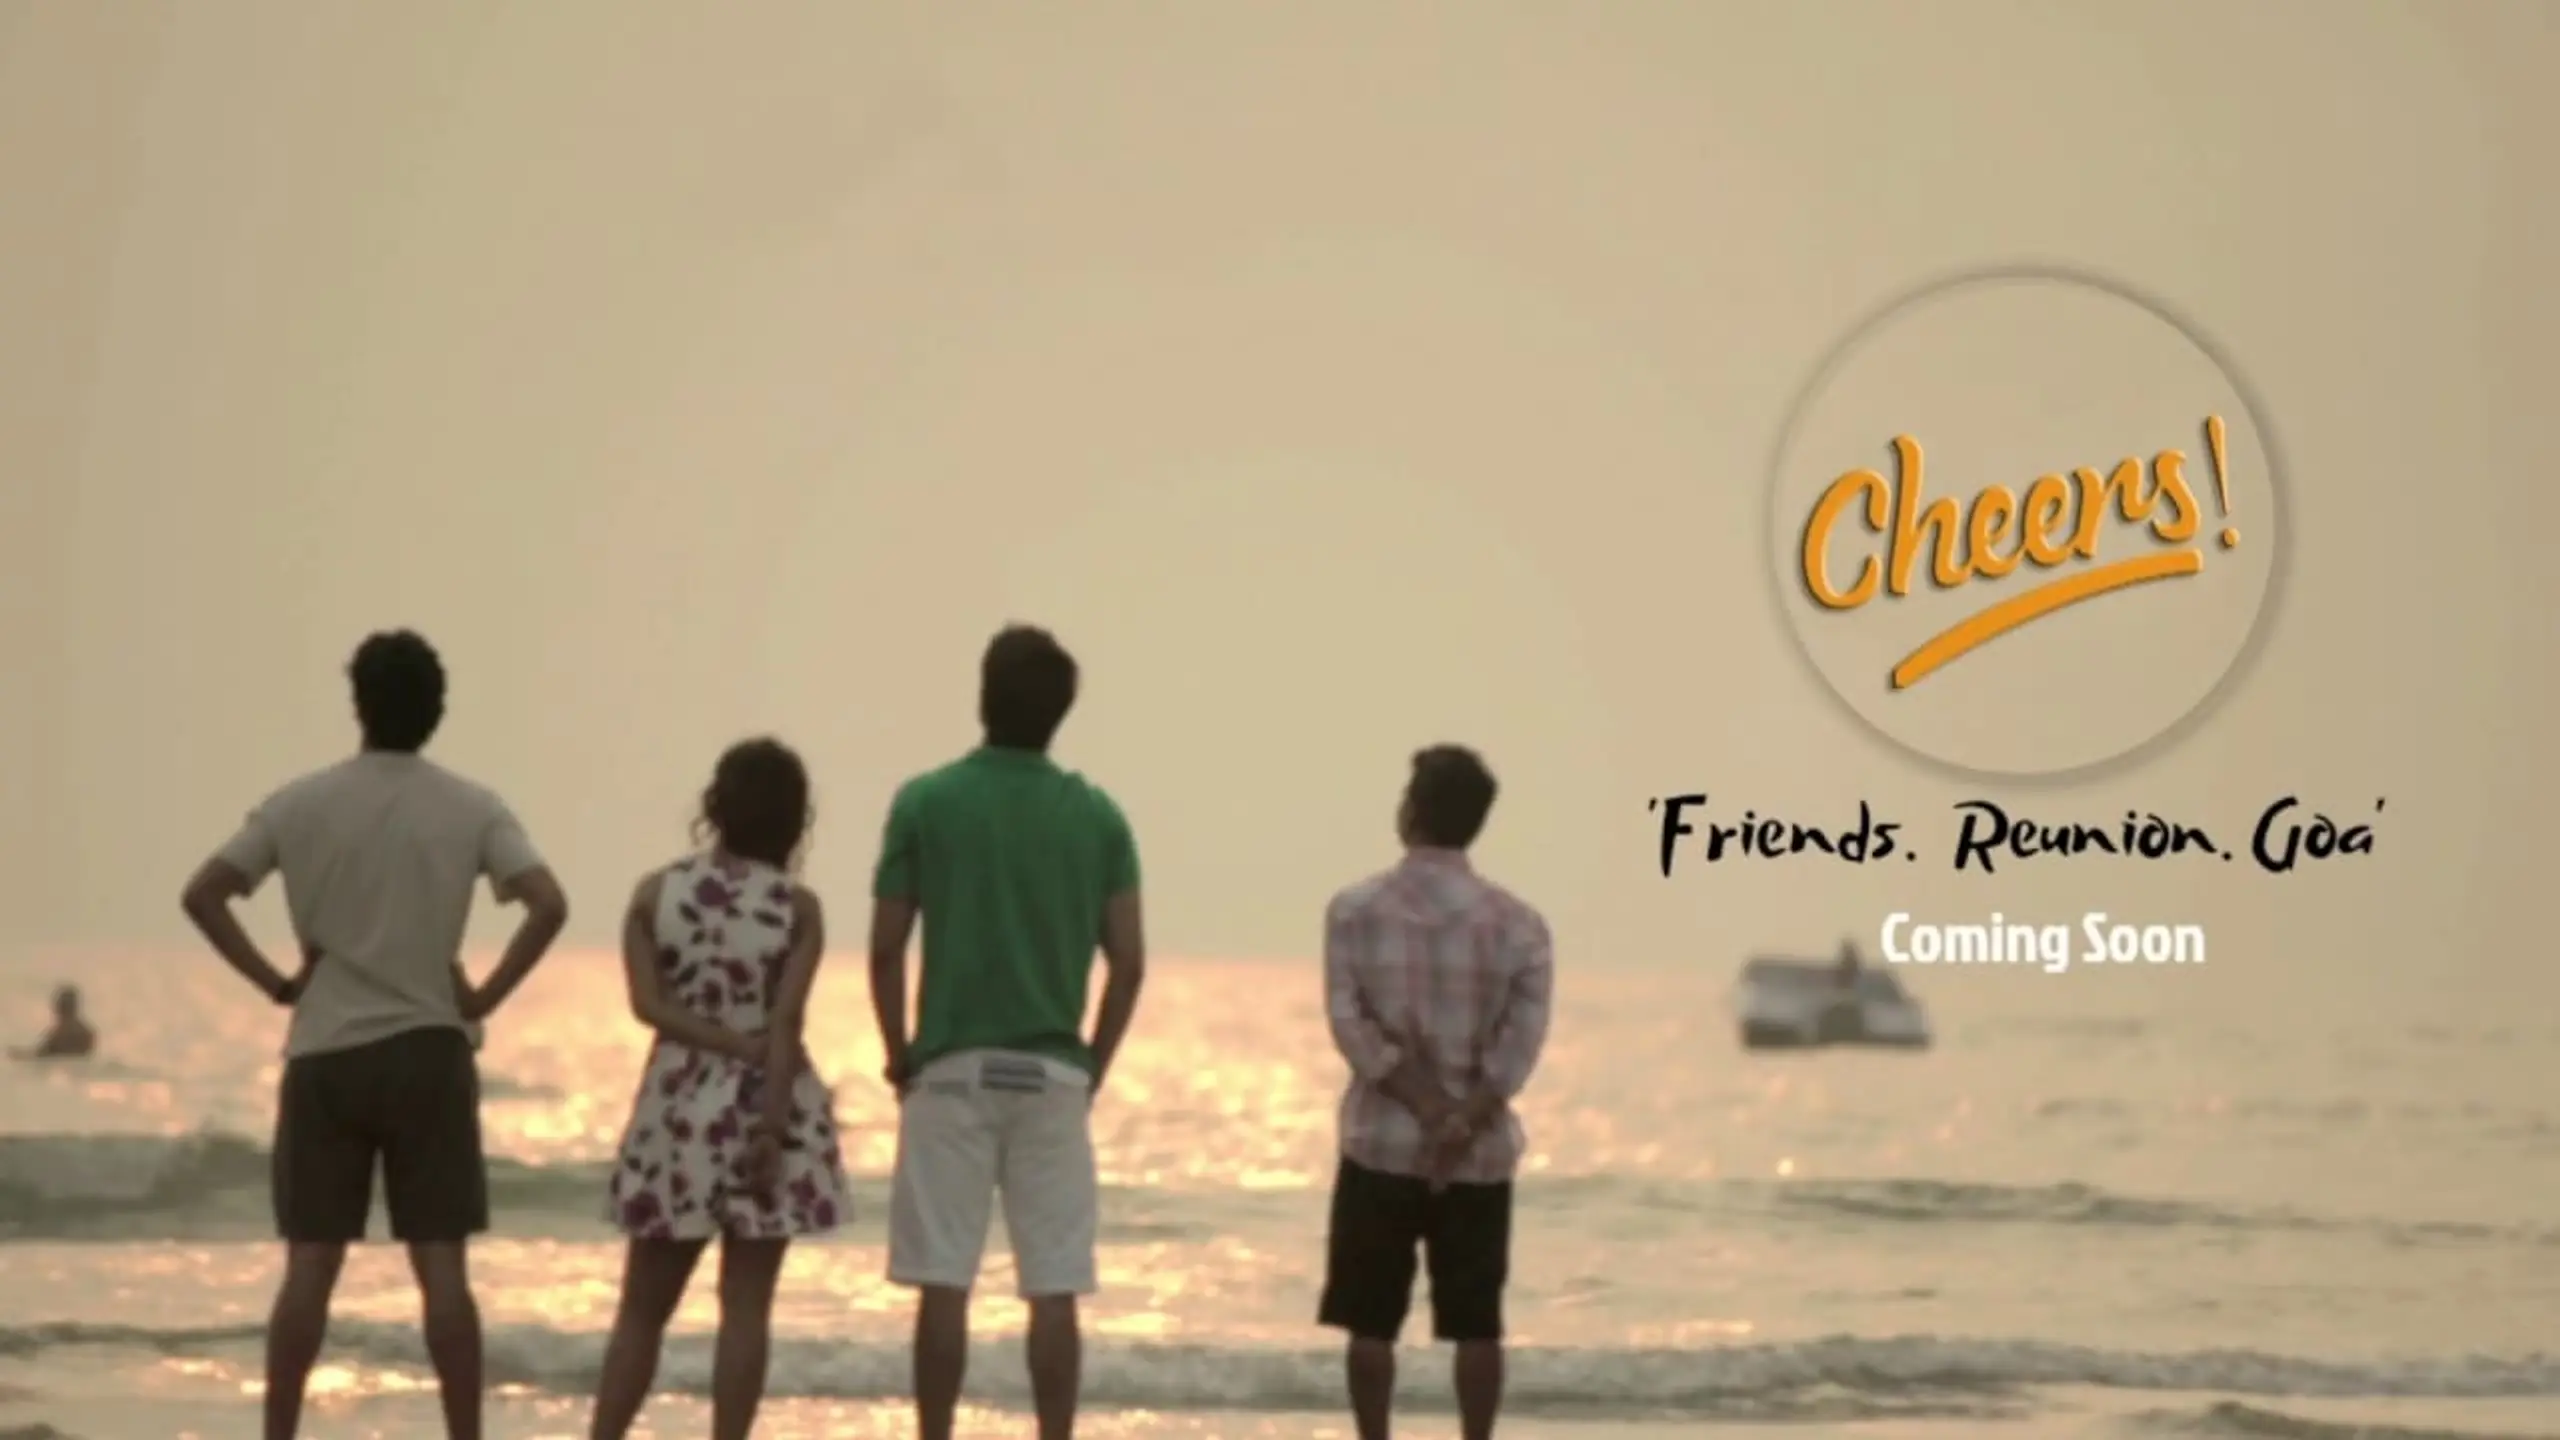 Cheers - Friends. Reunion. Goa.